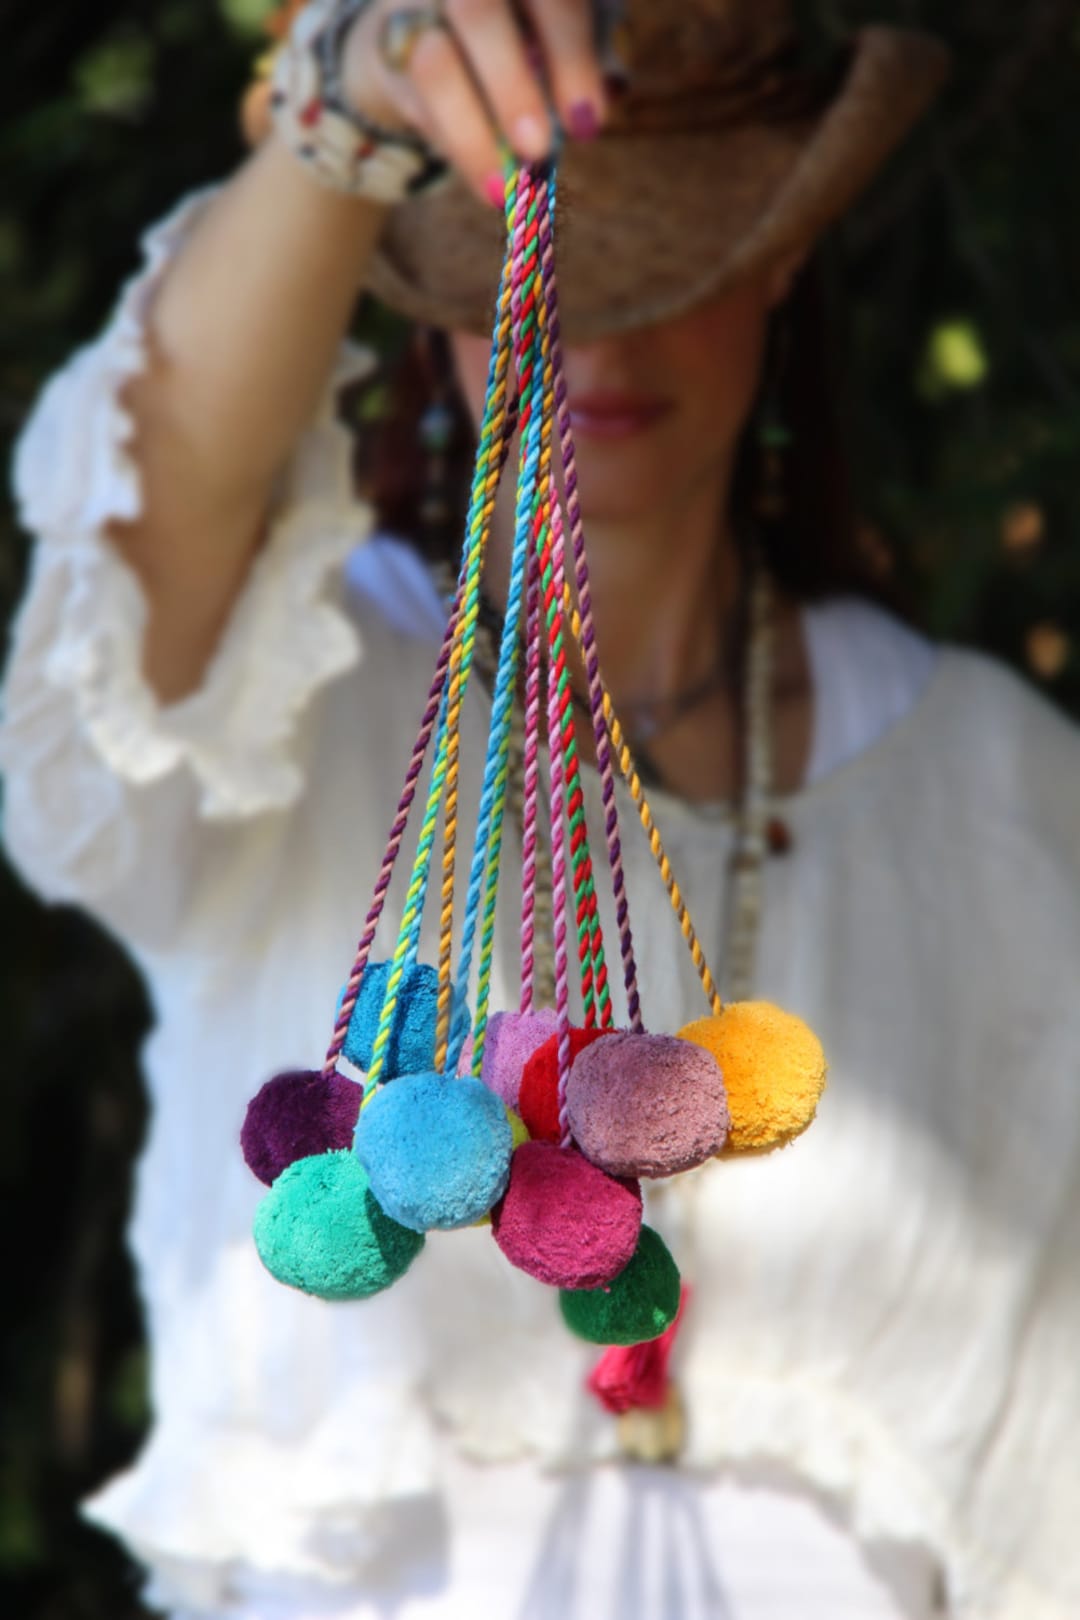 Offray Acrylic Yarn Pom Poms Great for Decorating Apparel & Creative DIY Craft Ideas - Blue - 1.5 in